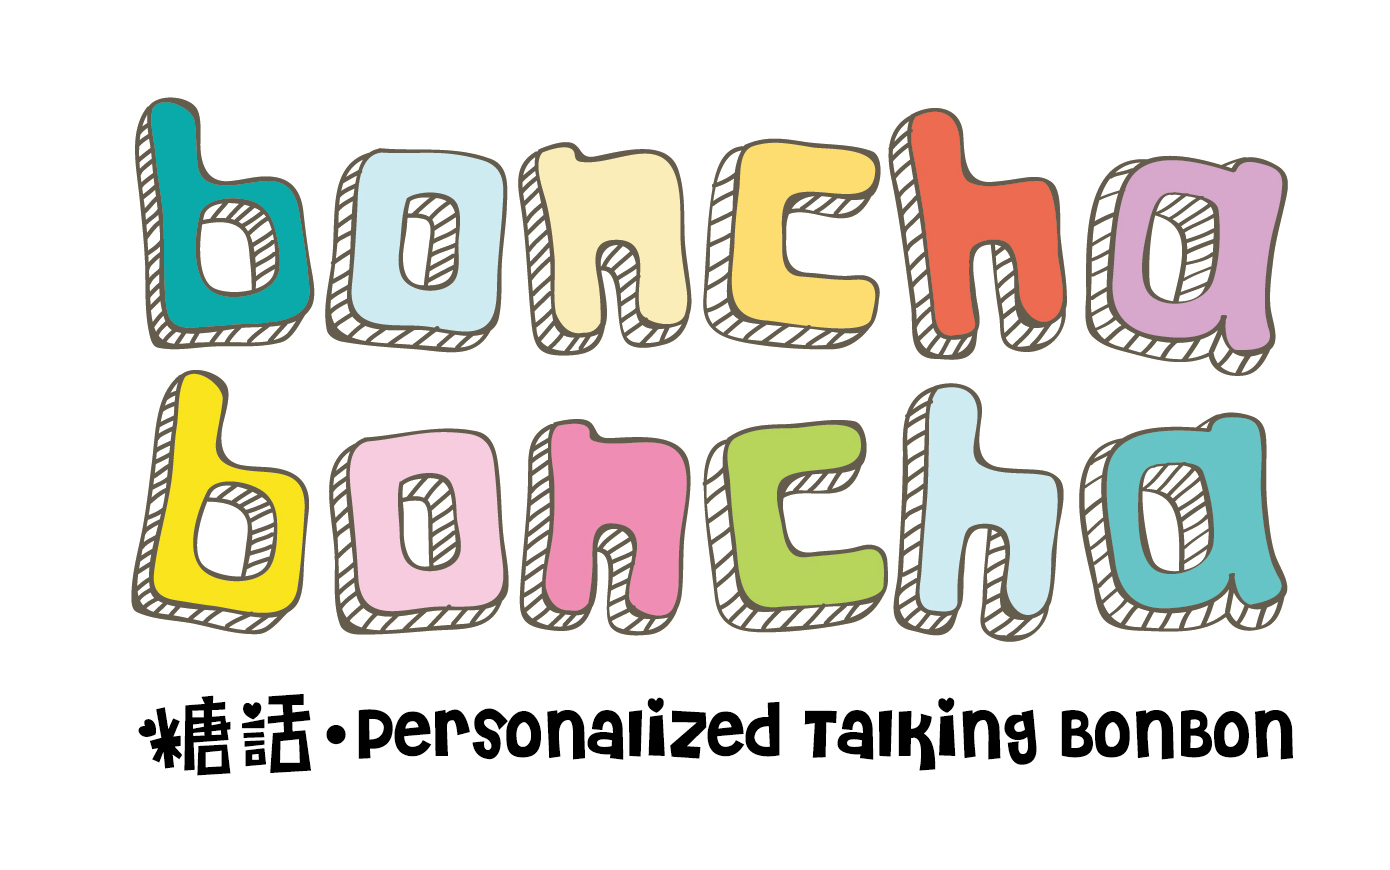 Boncha Boncha